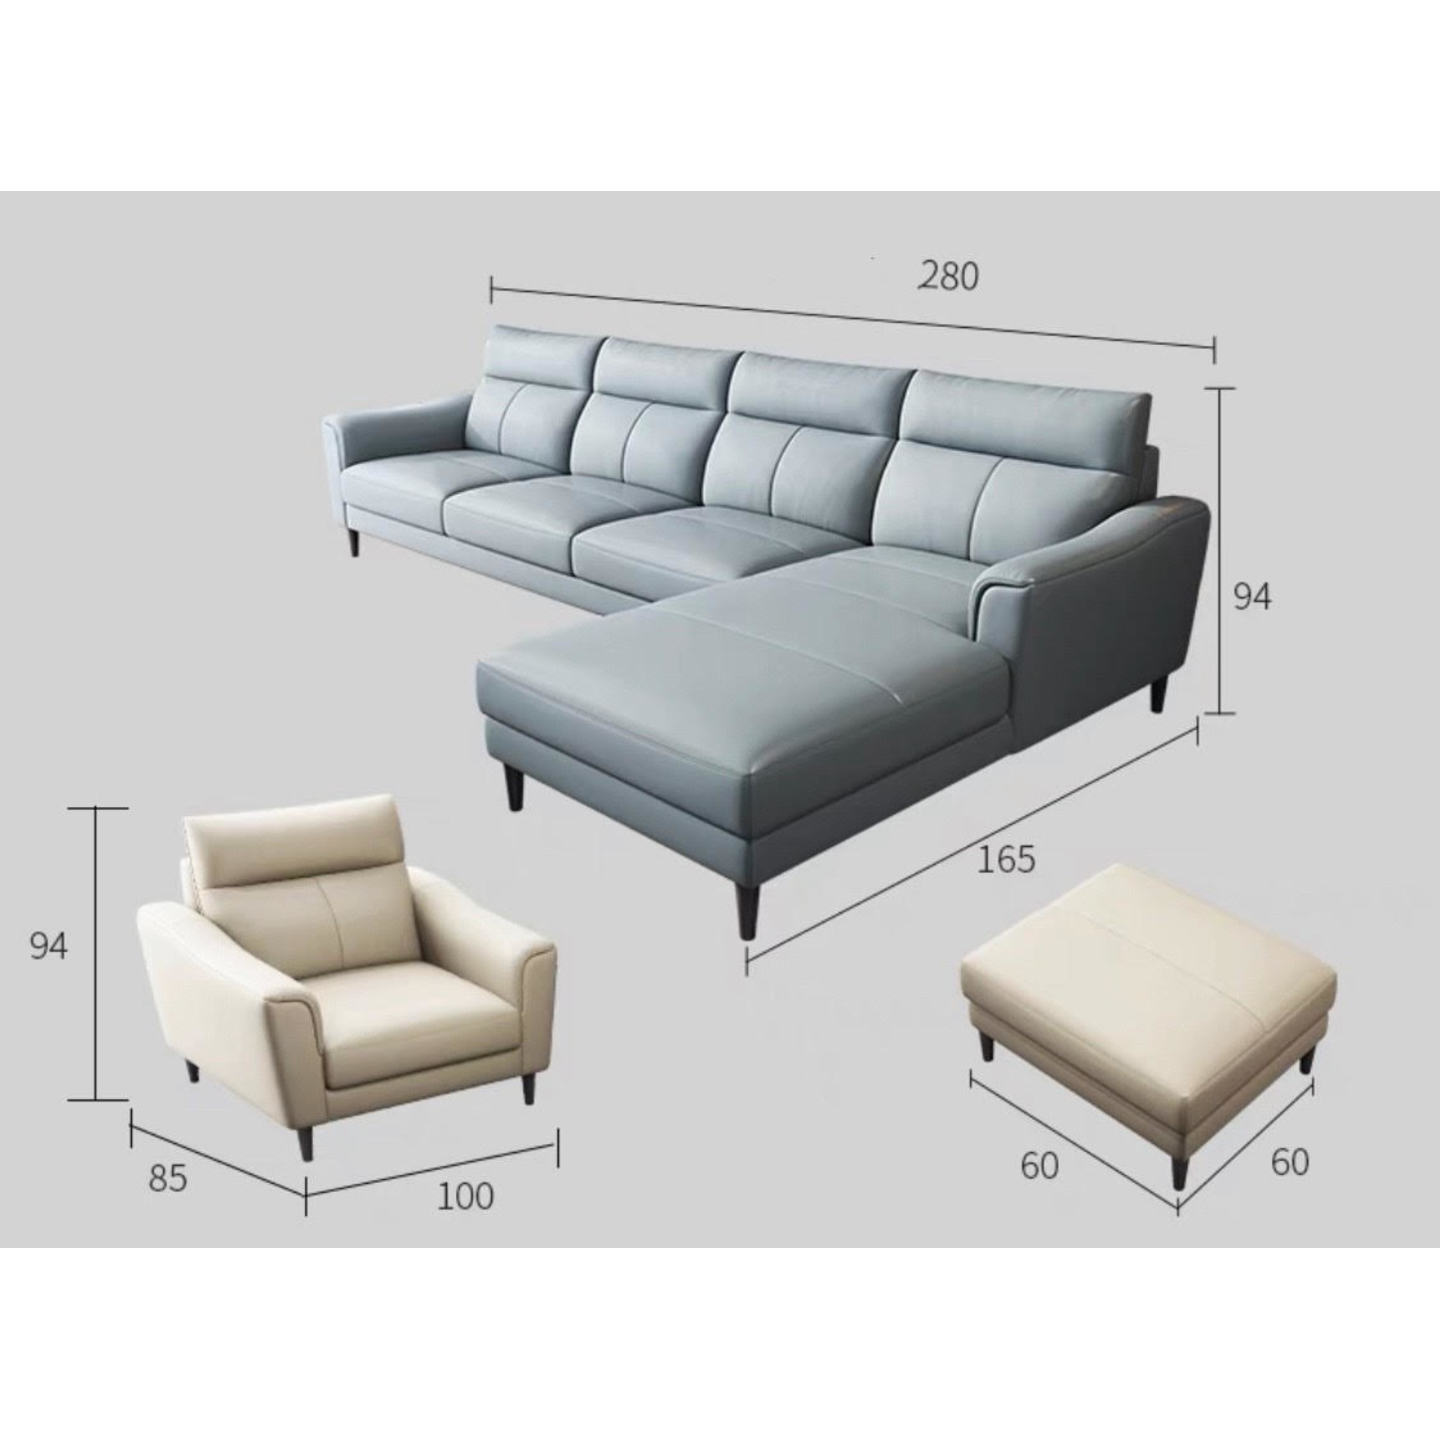 Nappa Premium Italian Sofa Contact Leather - Three + Concubine Seat + Single Seater + Leg Rest